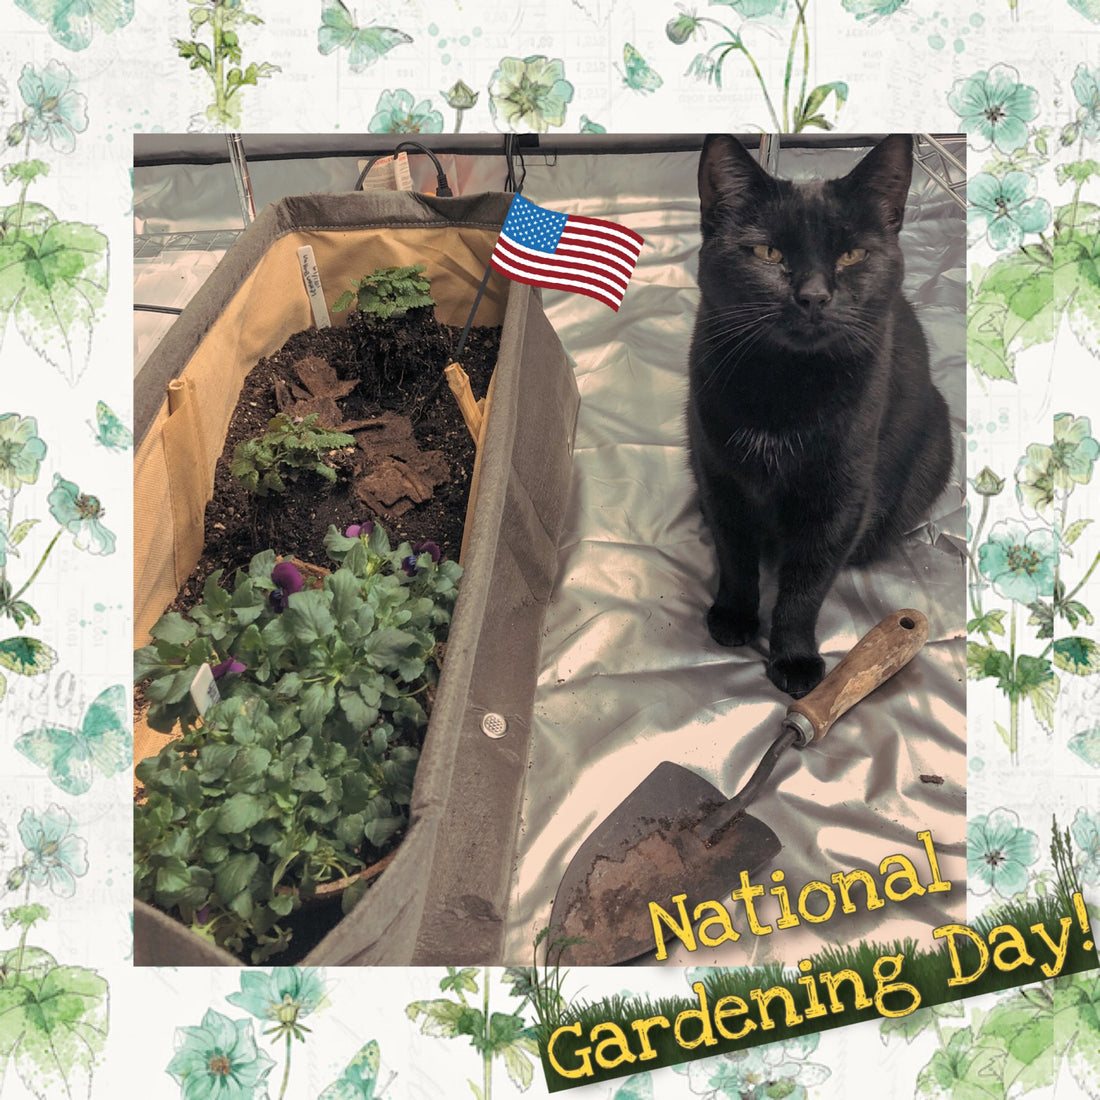 National Gardening Day!